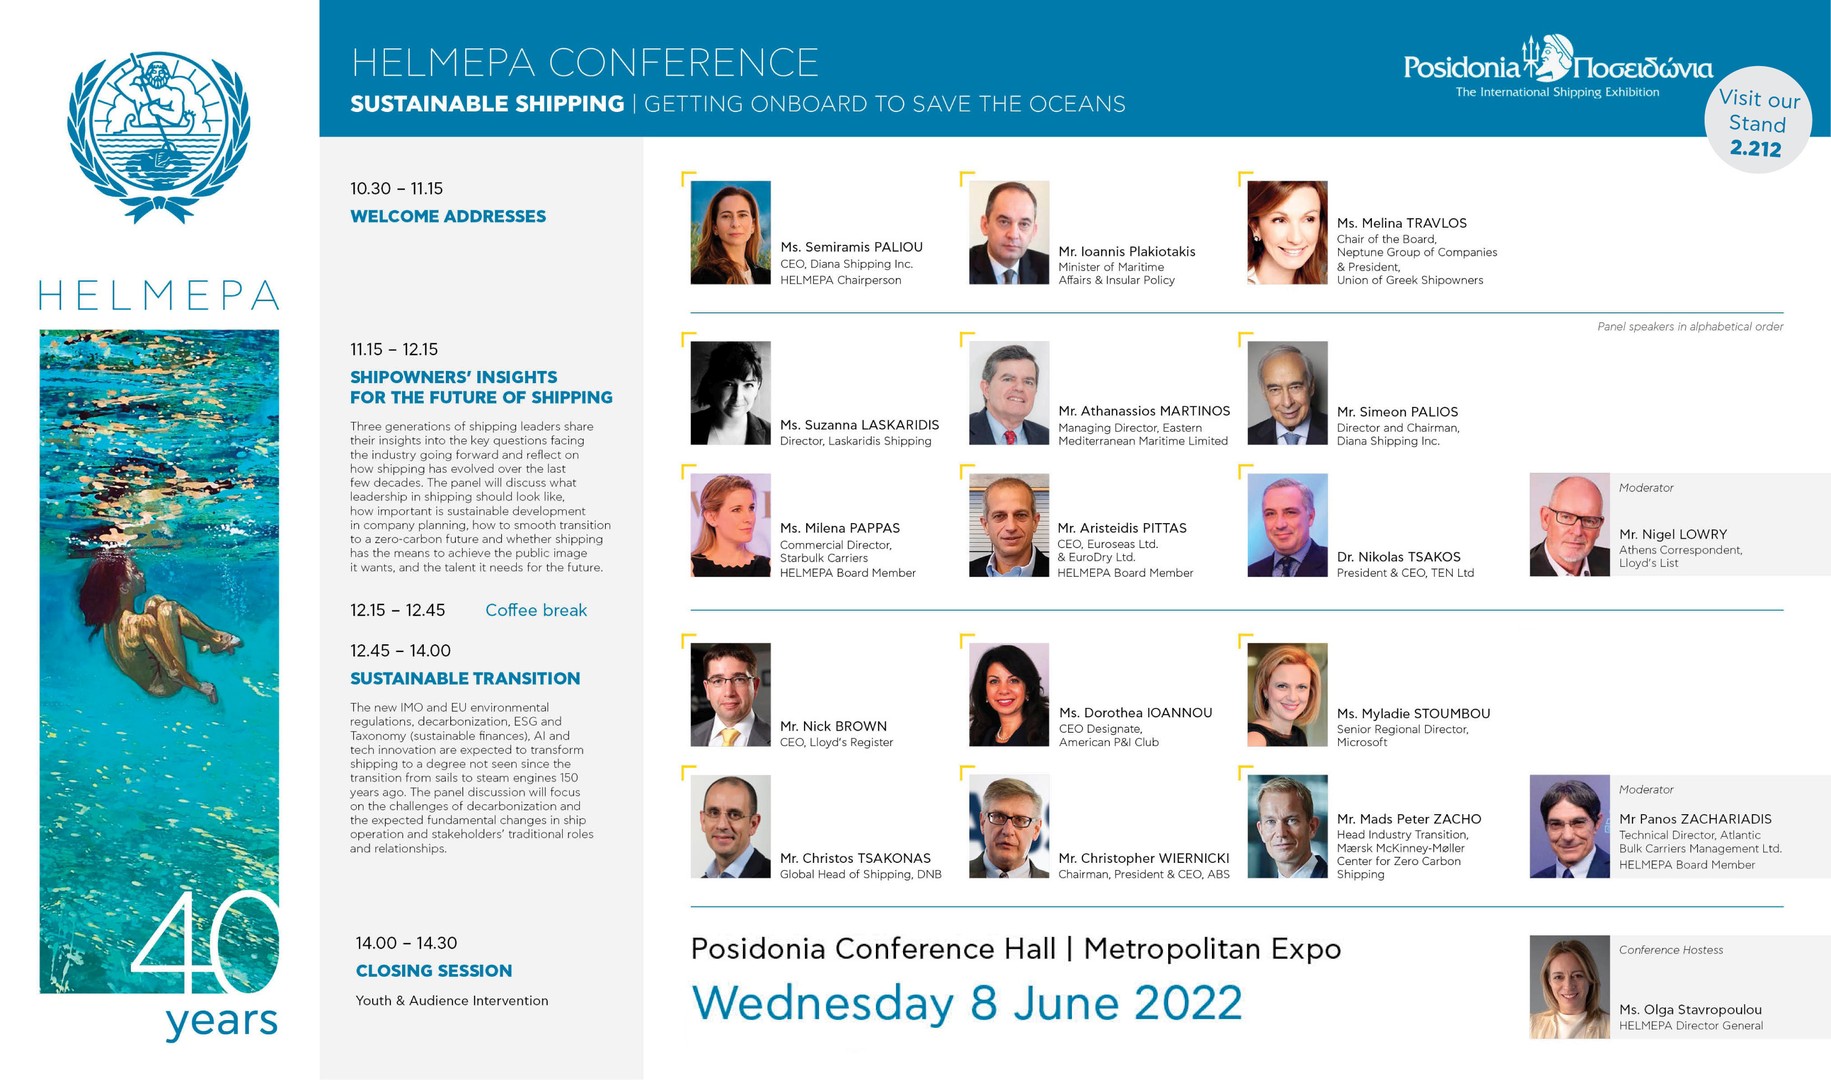 2022 Posidonia Conference Agenda